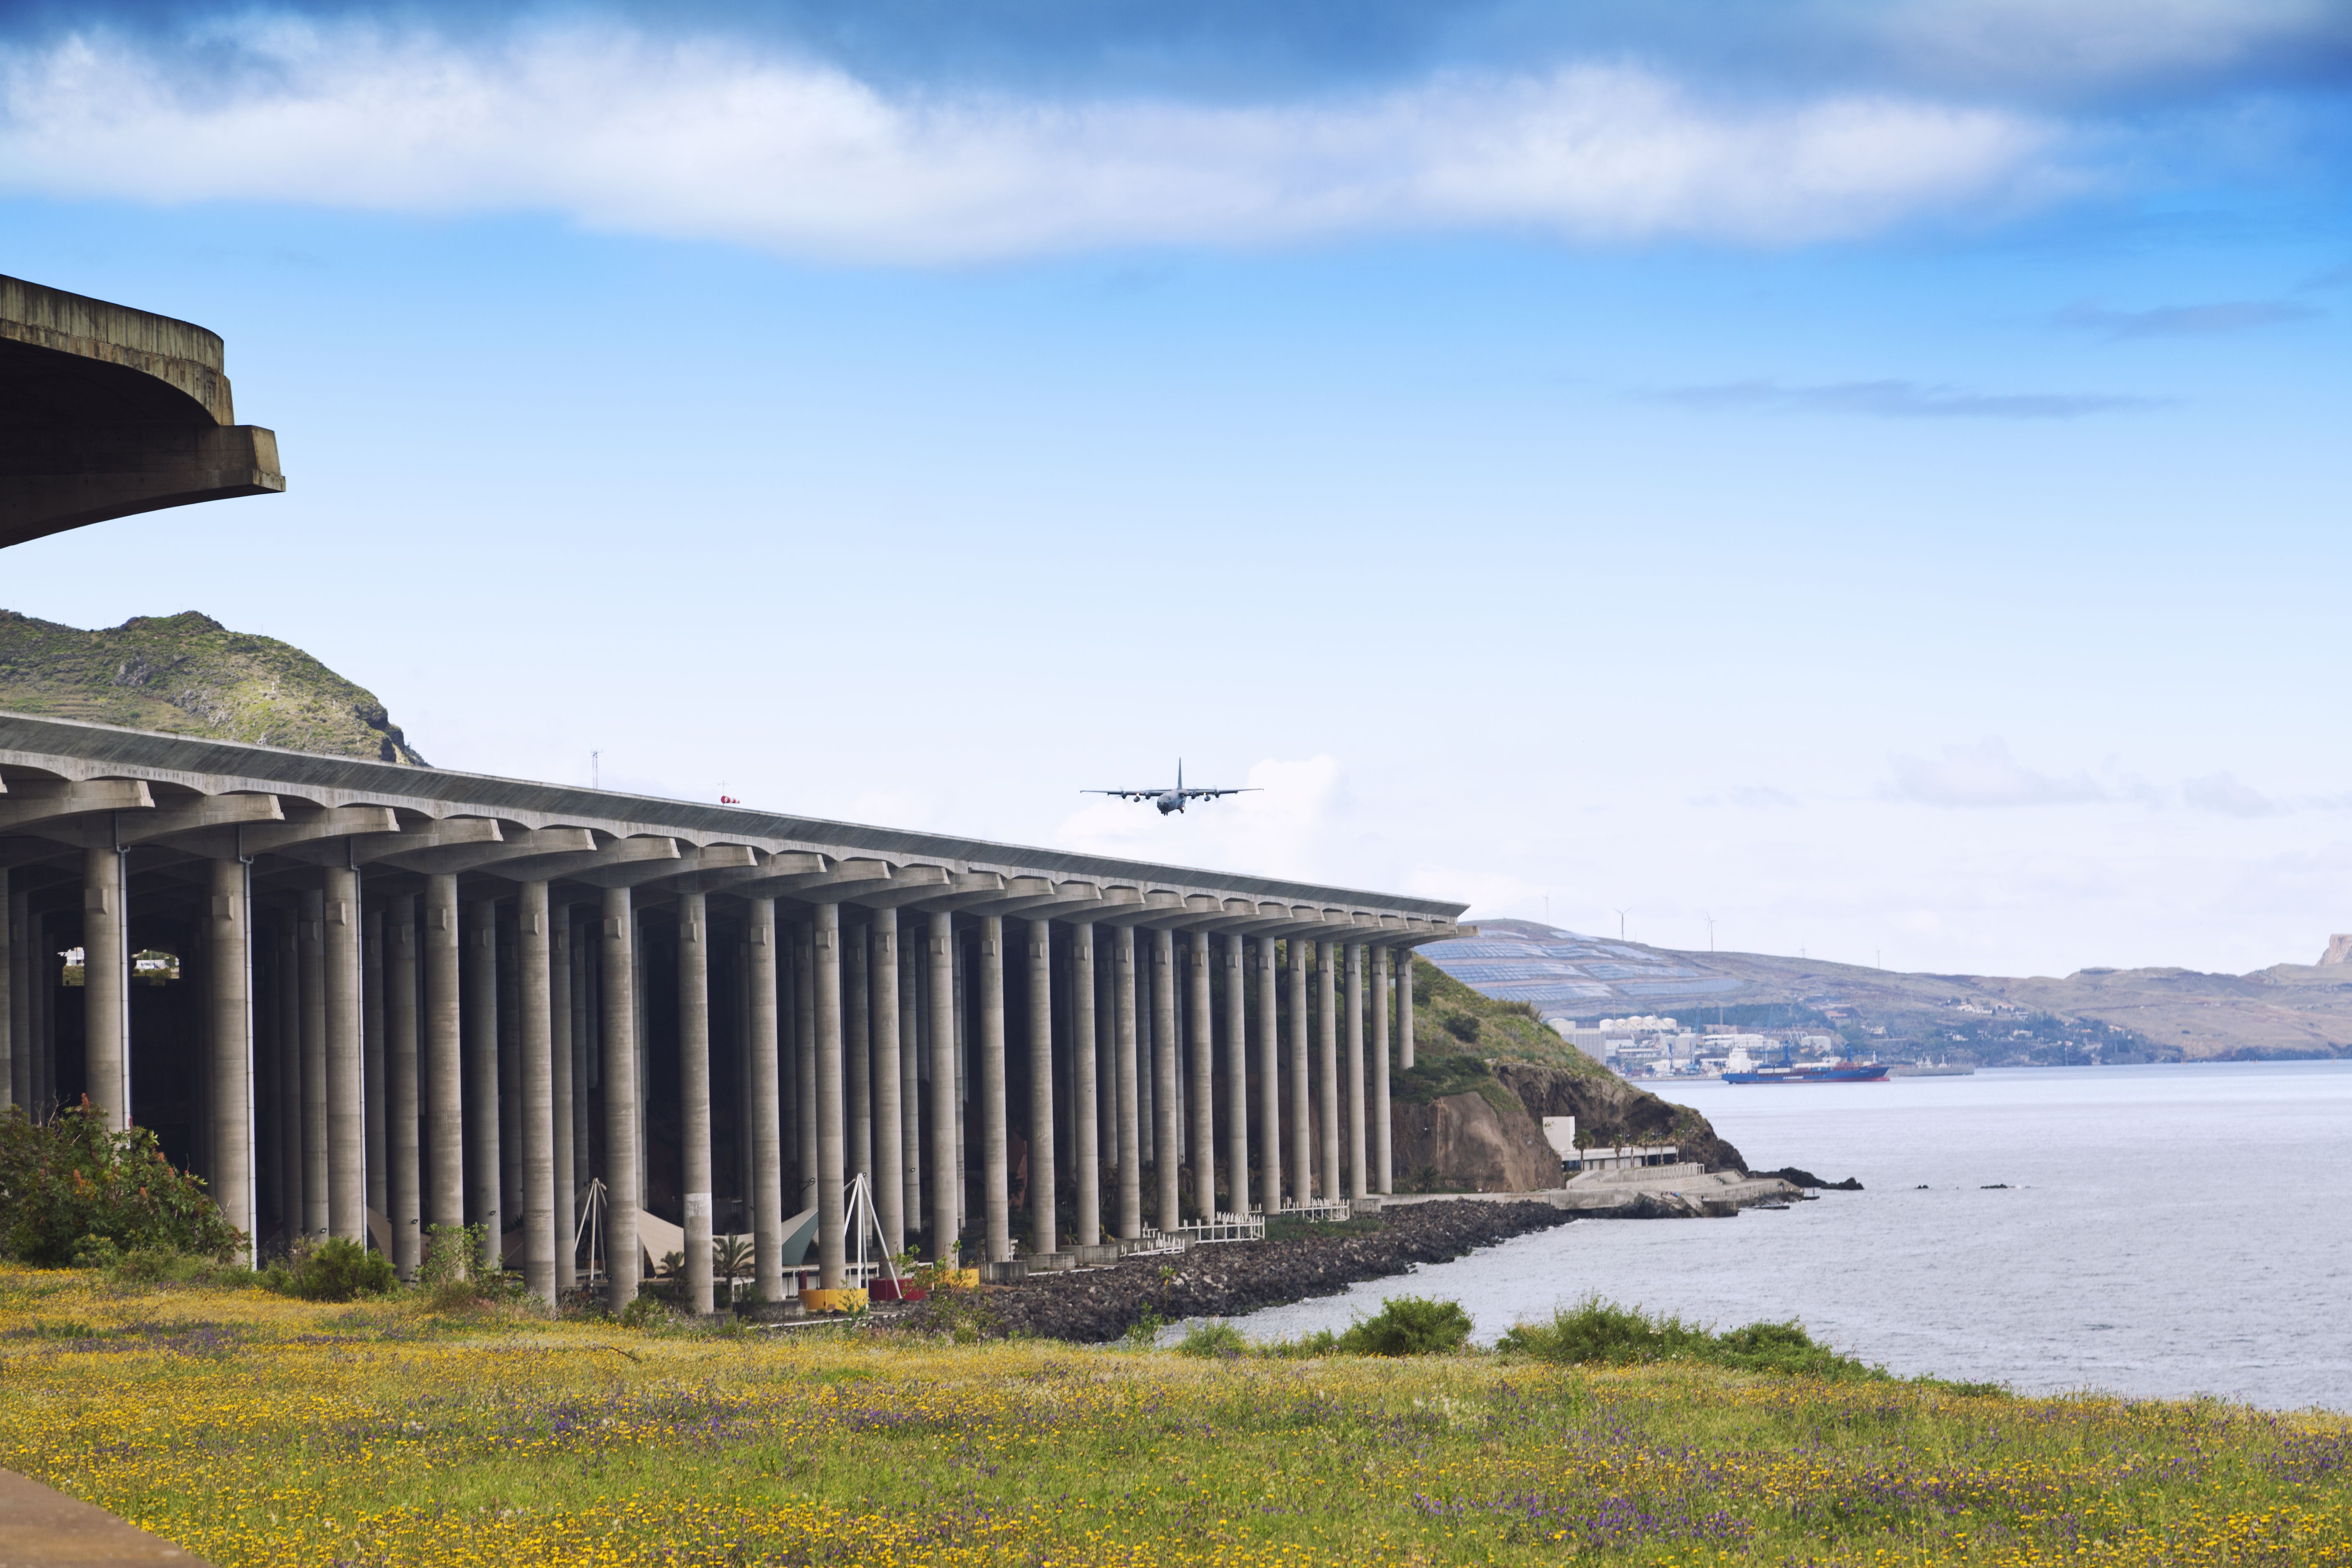 Madeira Airport runway extension